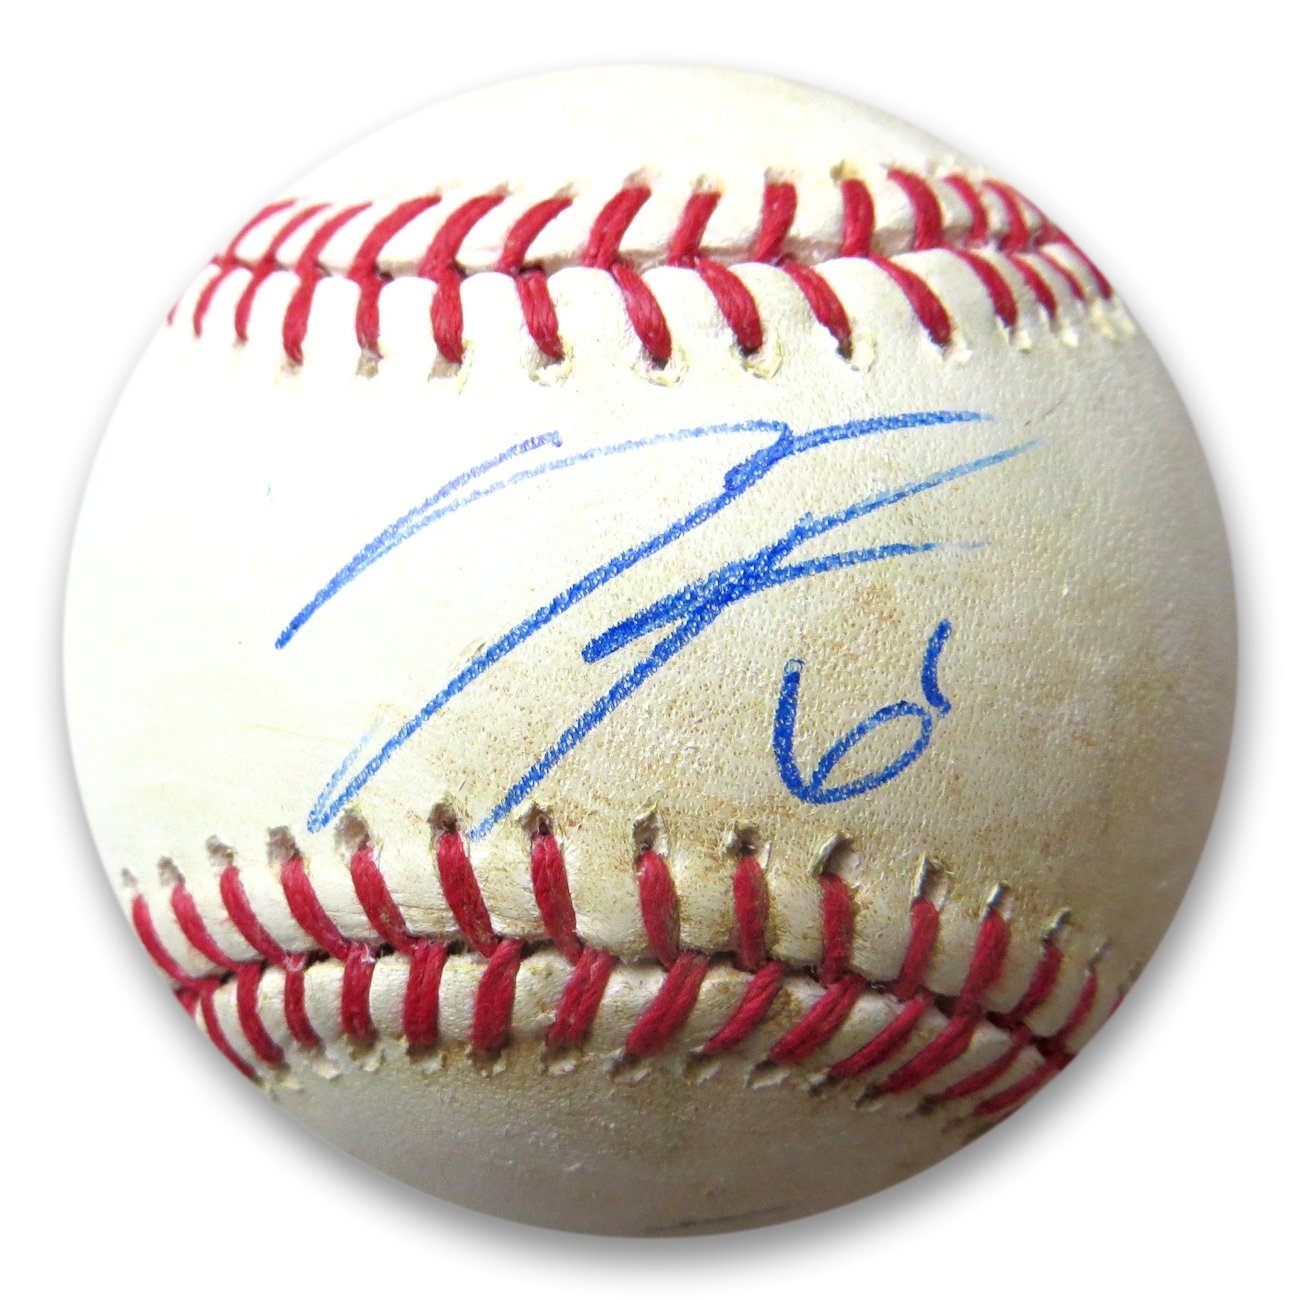 Joc Pederson Signed Baseball, Autographed Joc Pederson Baseball